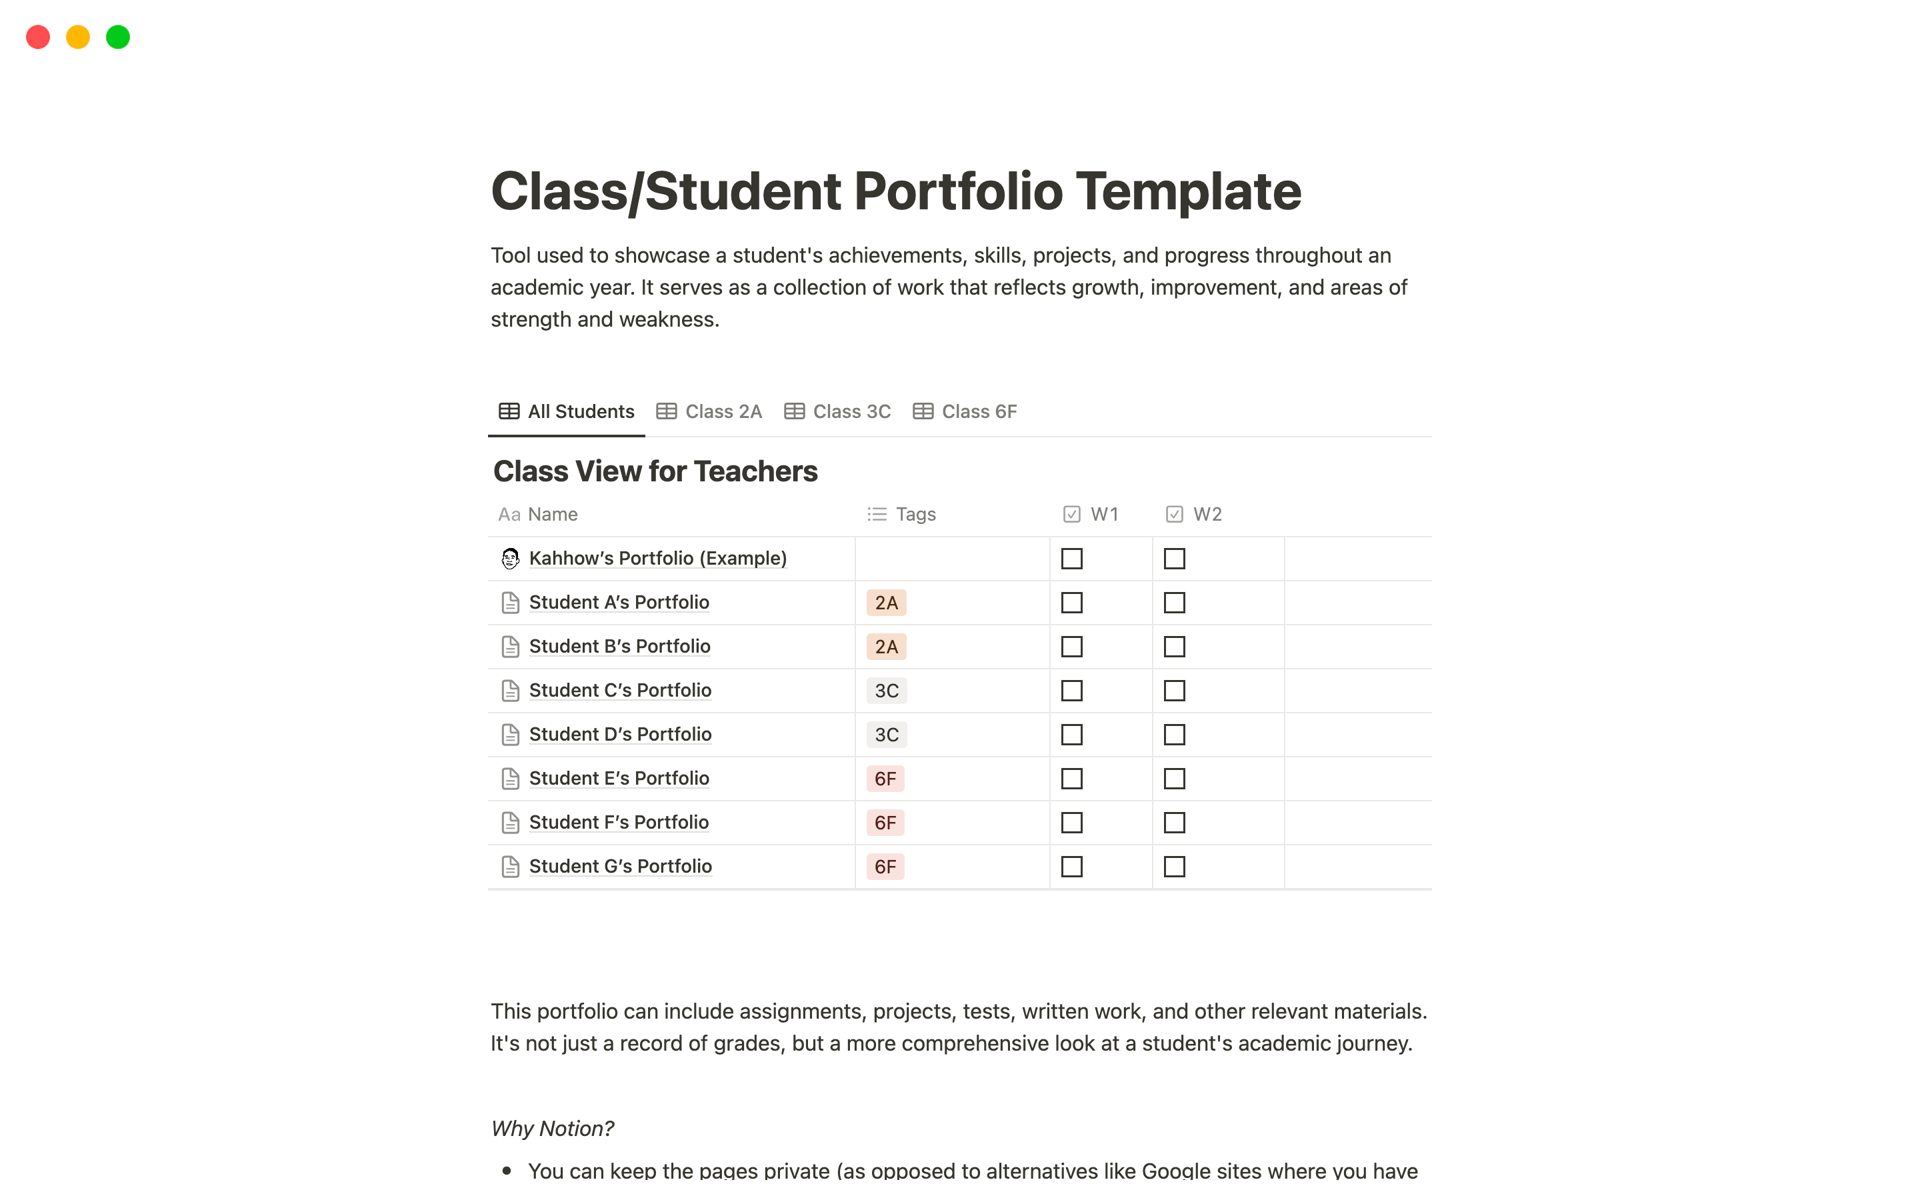 Aperçu du modèle de Class/ Student Portfolio